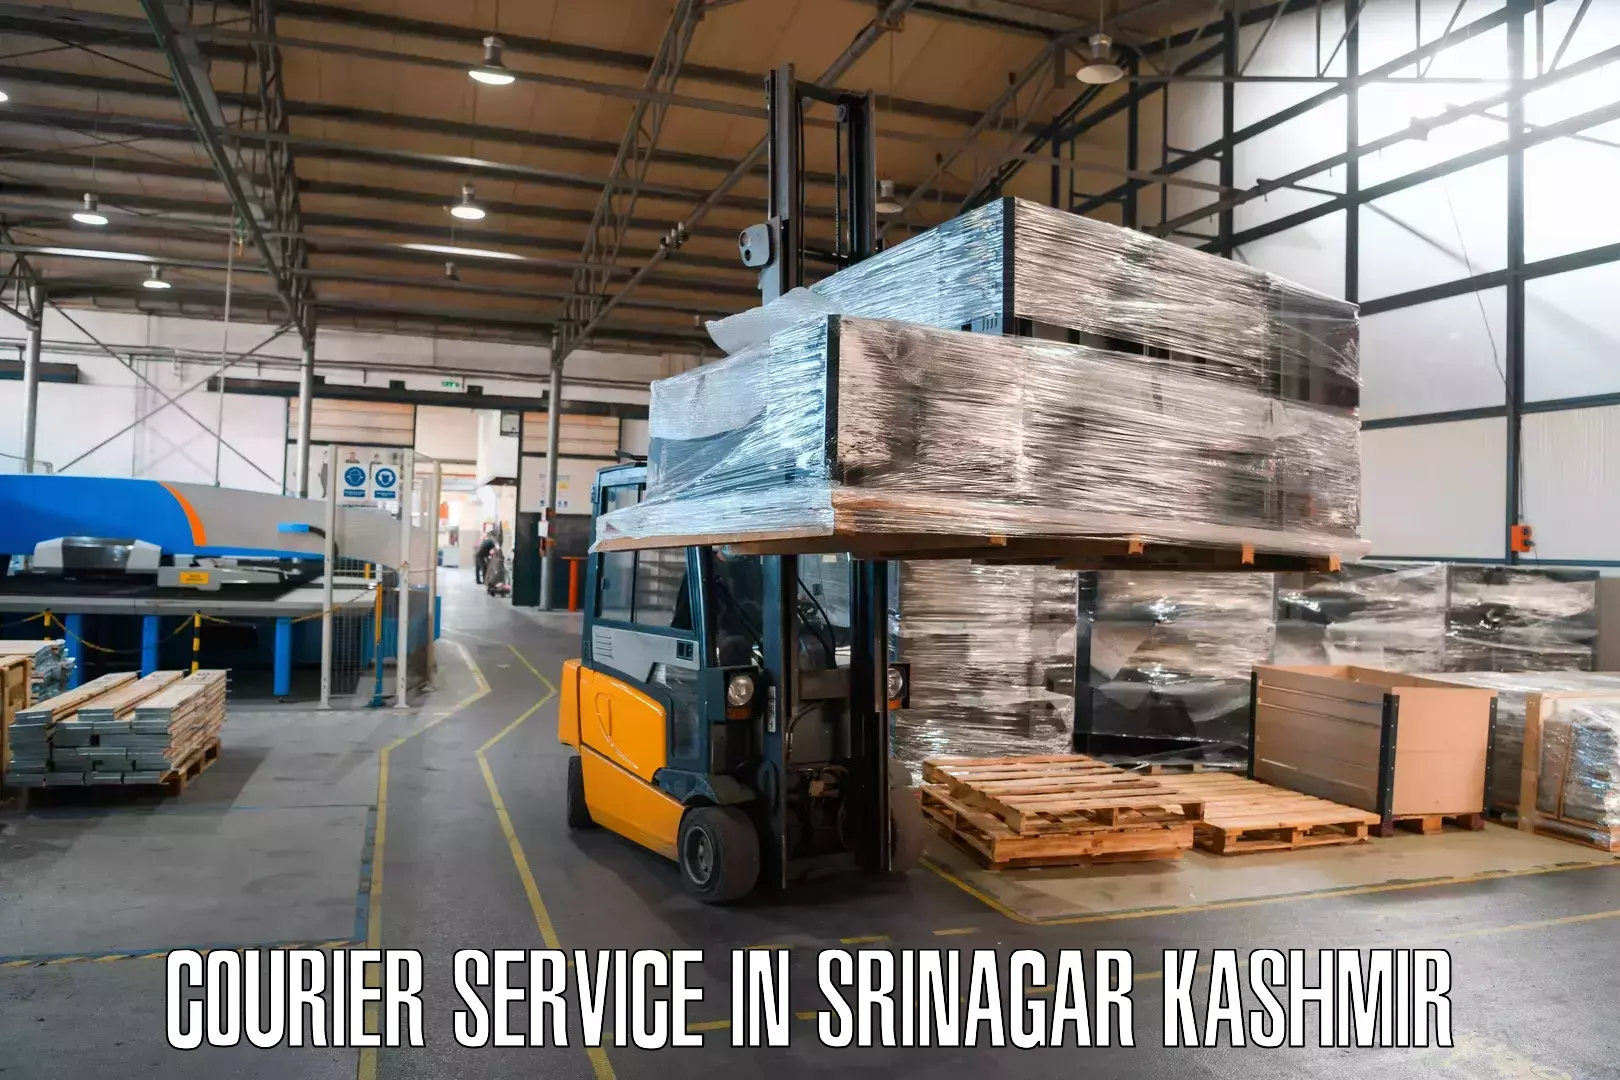 Flexible delivery scheduling in Srinagar Kashmir